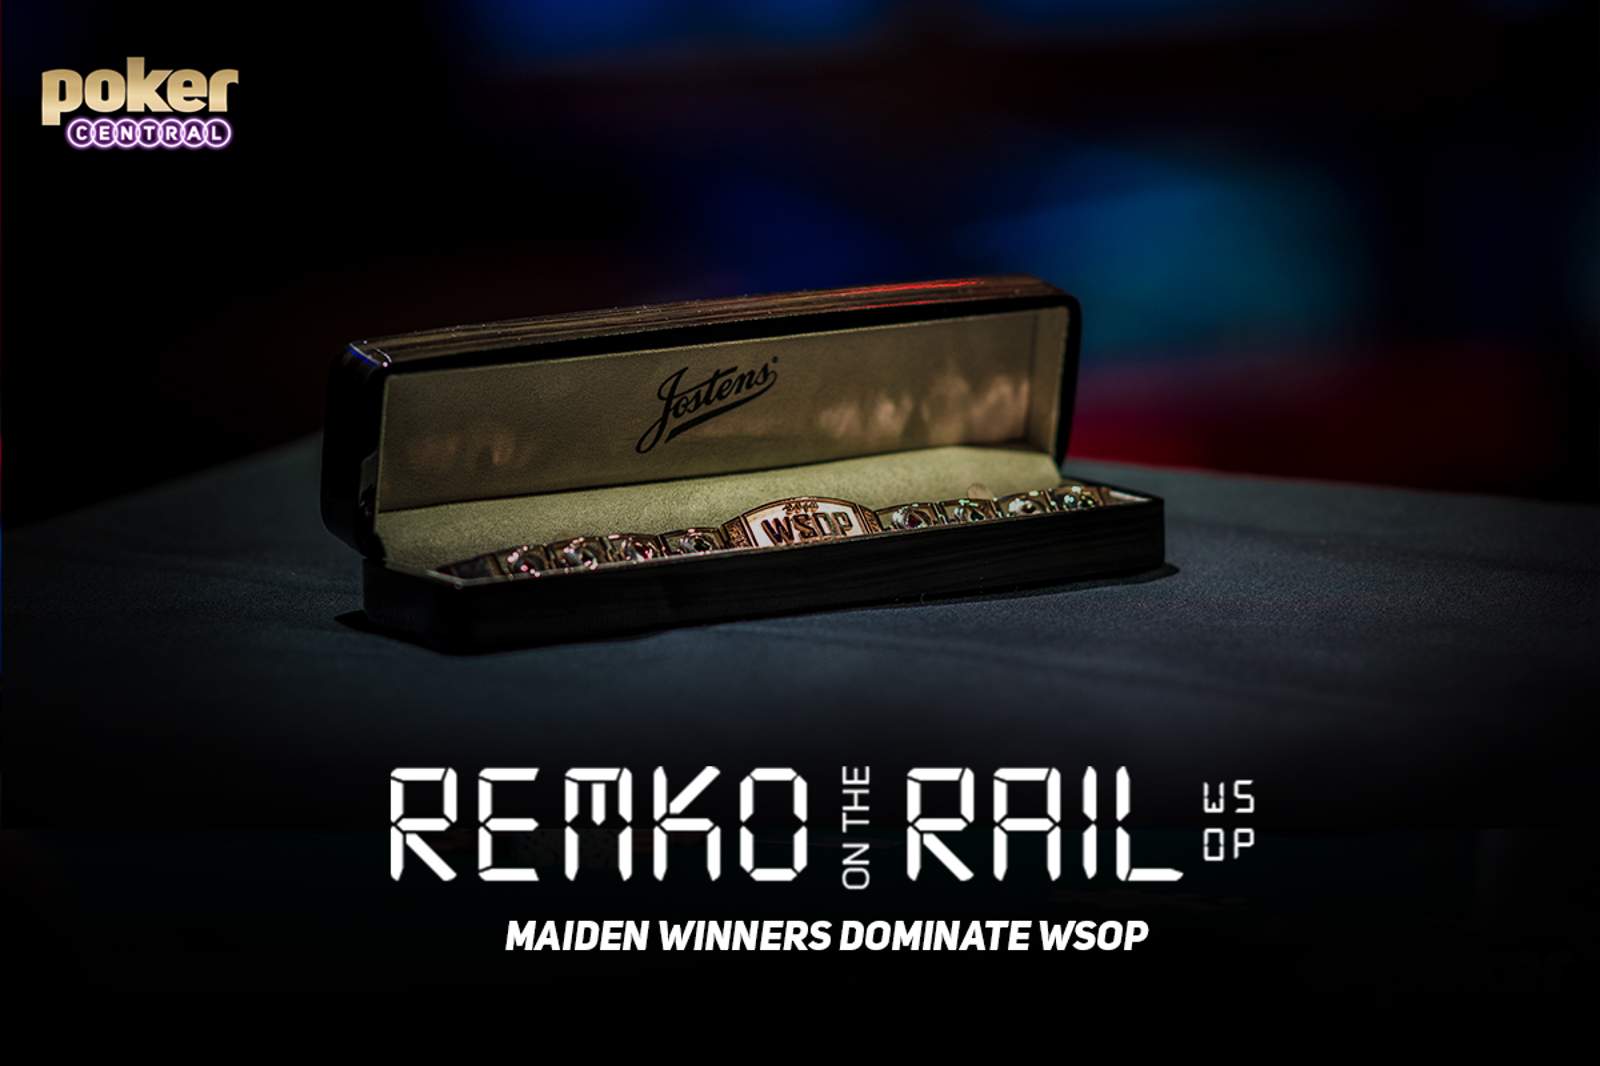 Remko on the Rail – Maiden Winners Dominate WSOP